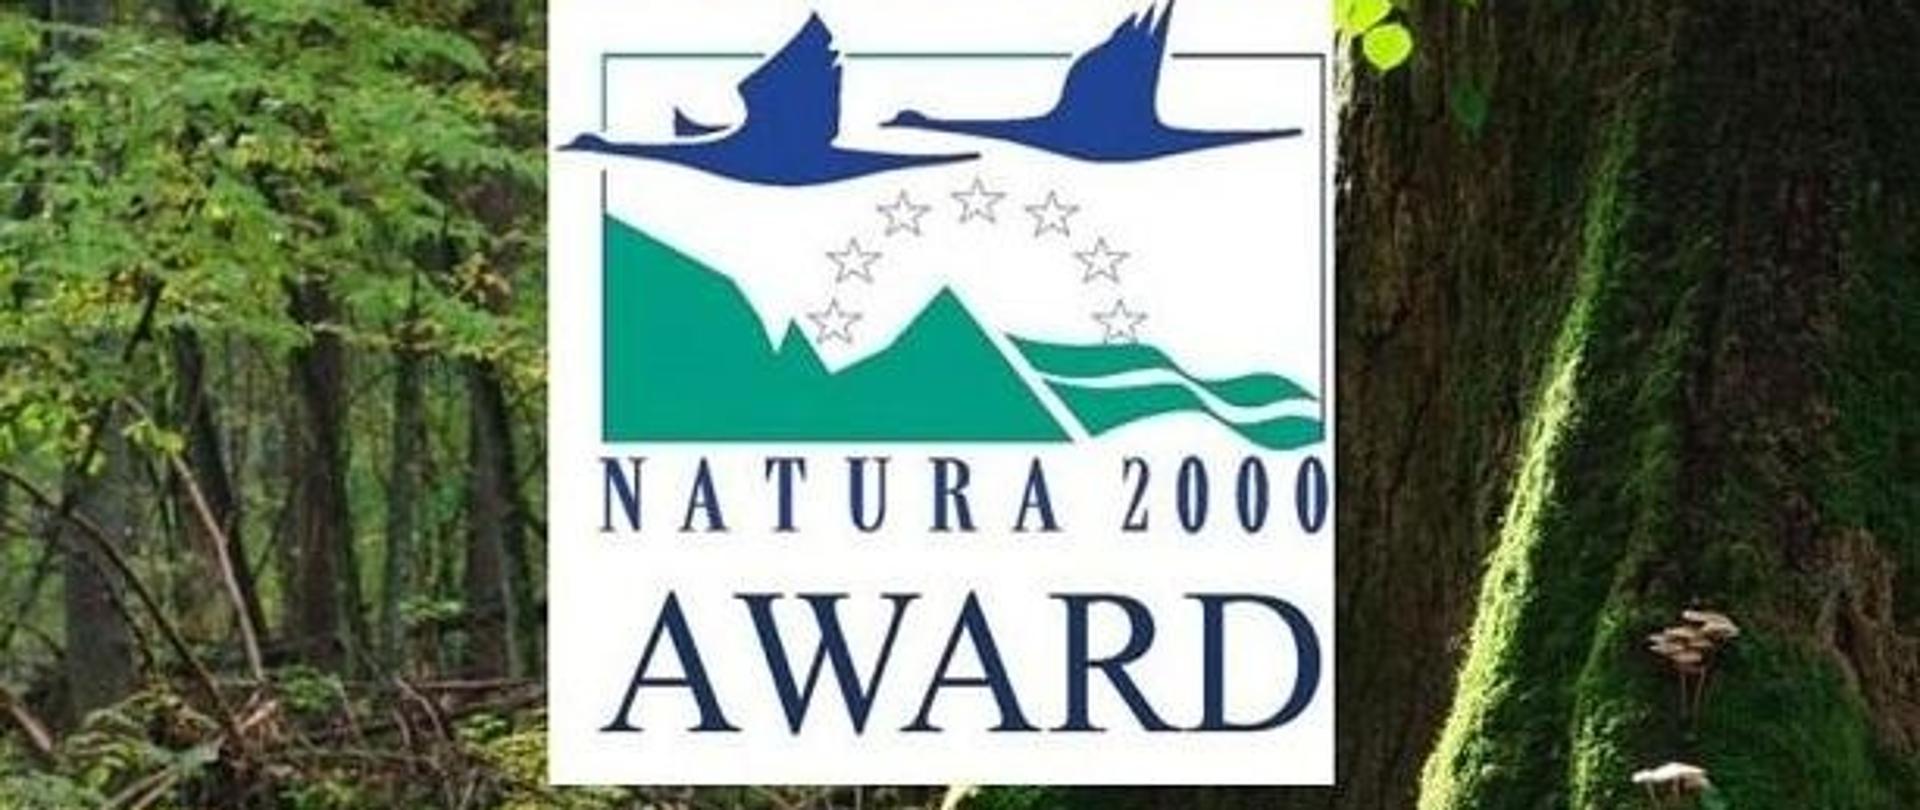 Na tle lasu Napis Natura 2000 AWARDS